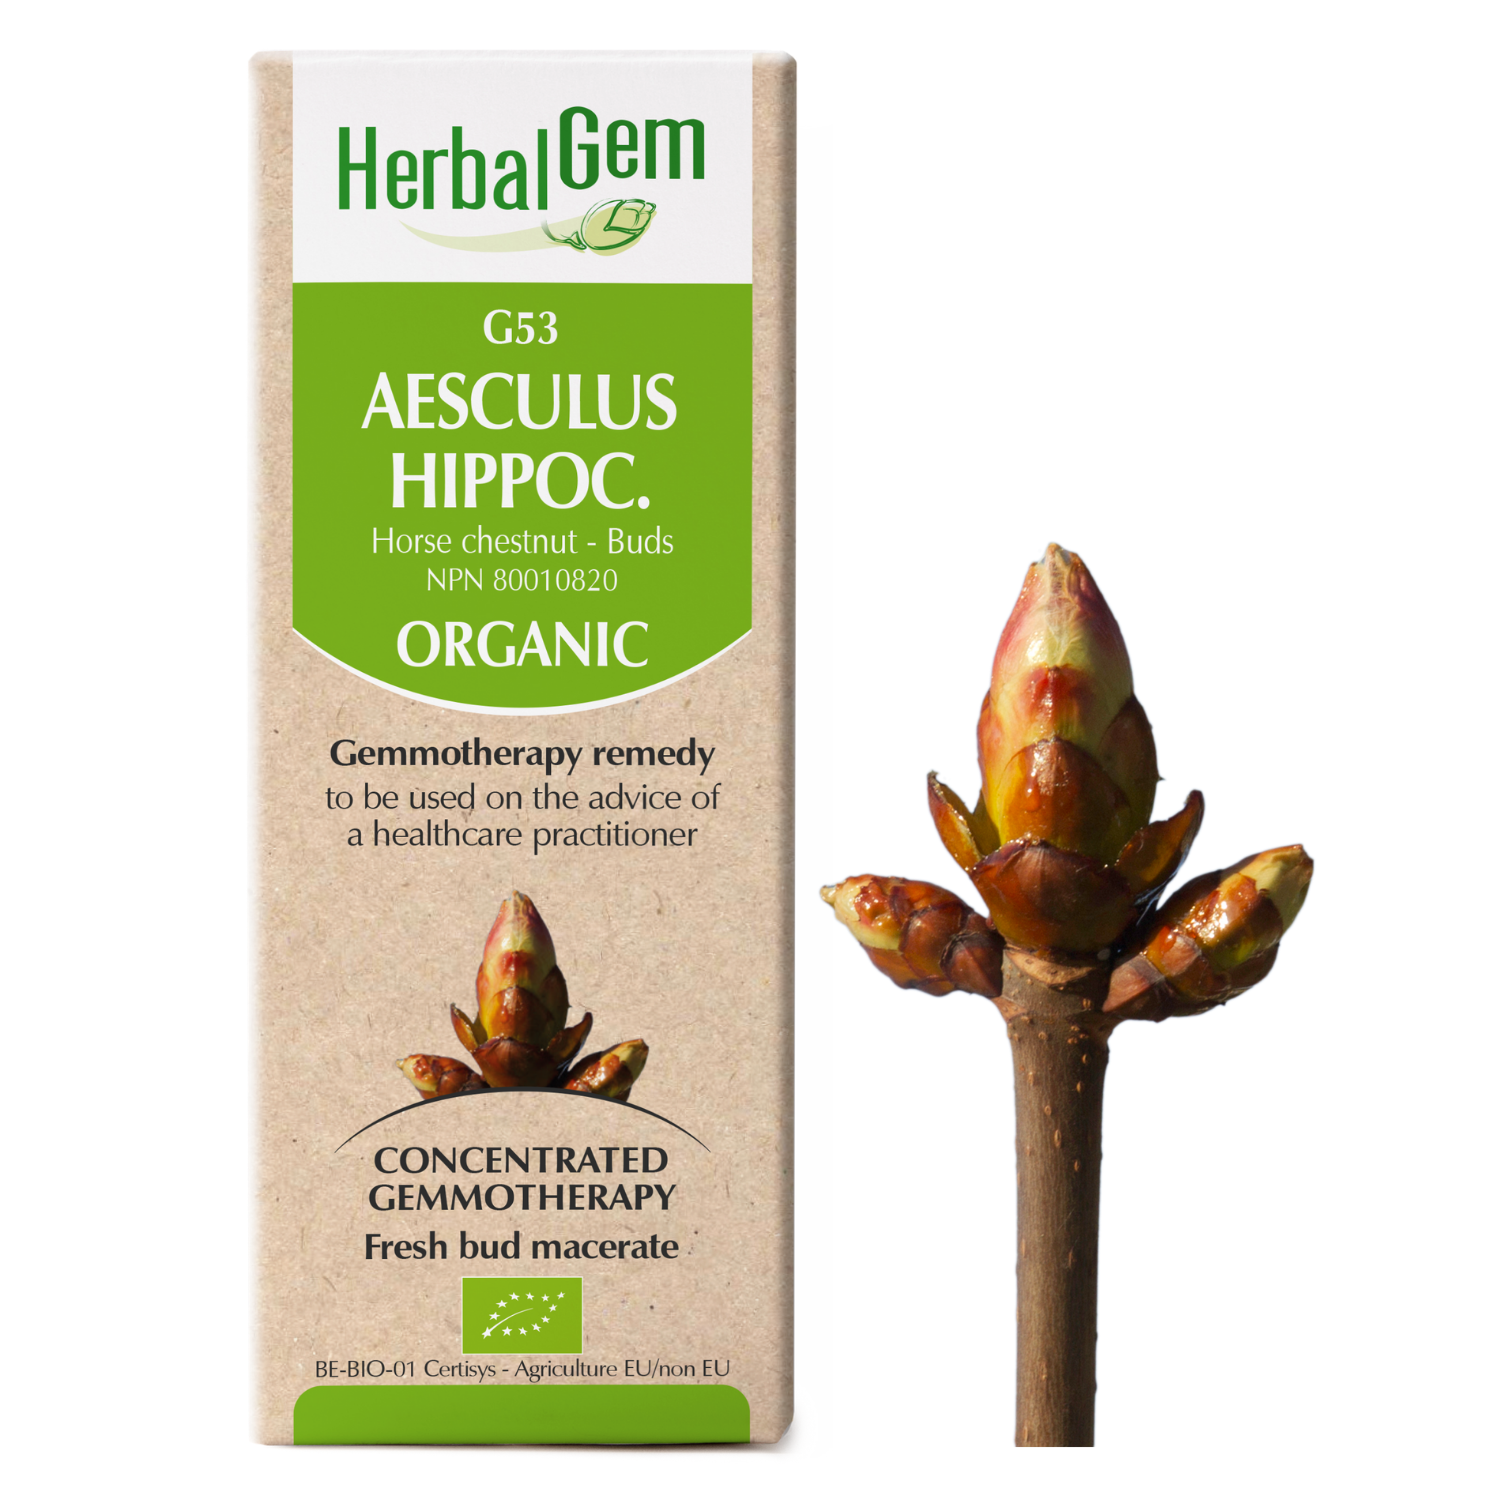 G53 Aesculus hippocastanum Gemmotherapy remedy – Organic  Horse chestnut – Buds  50 ml